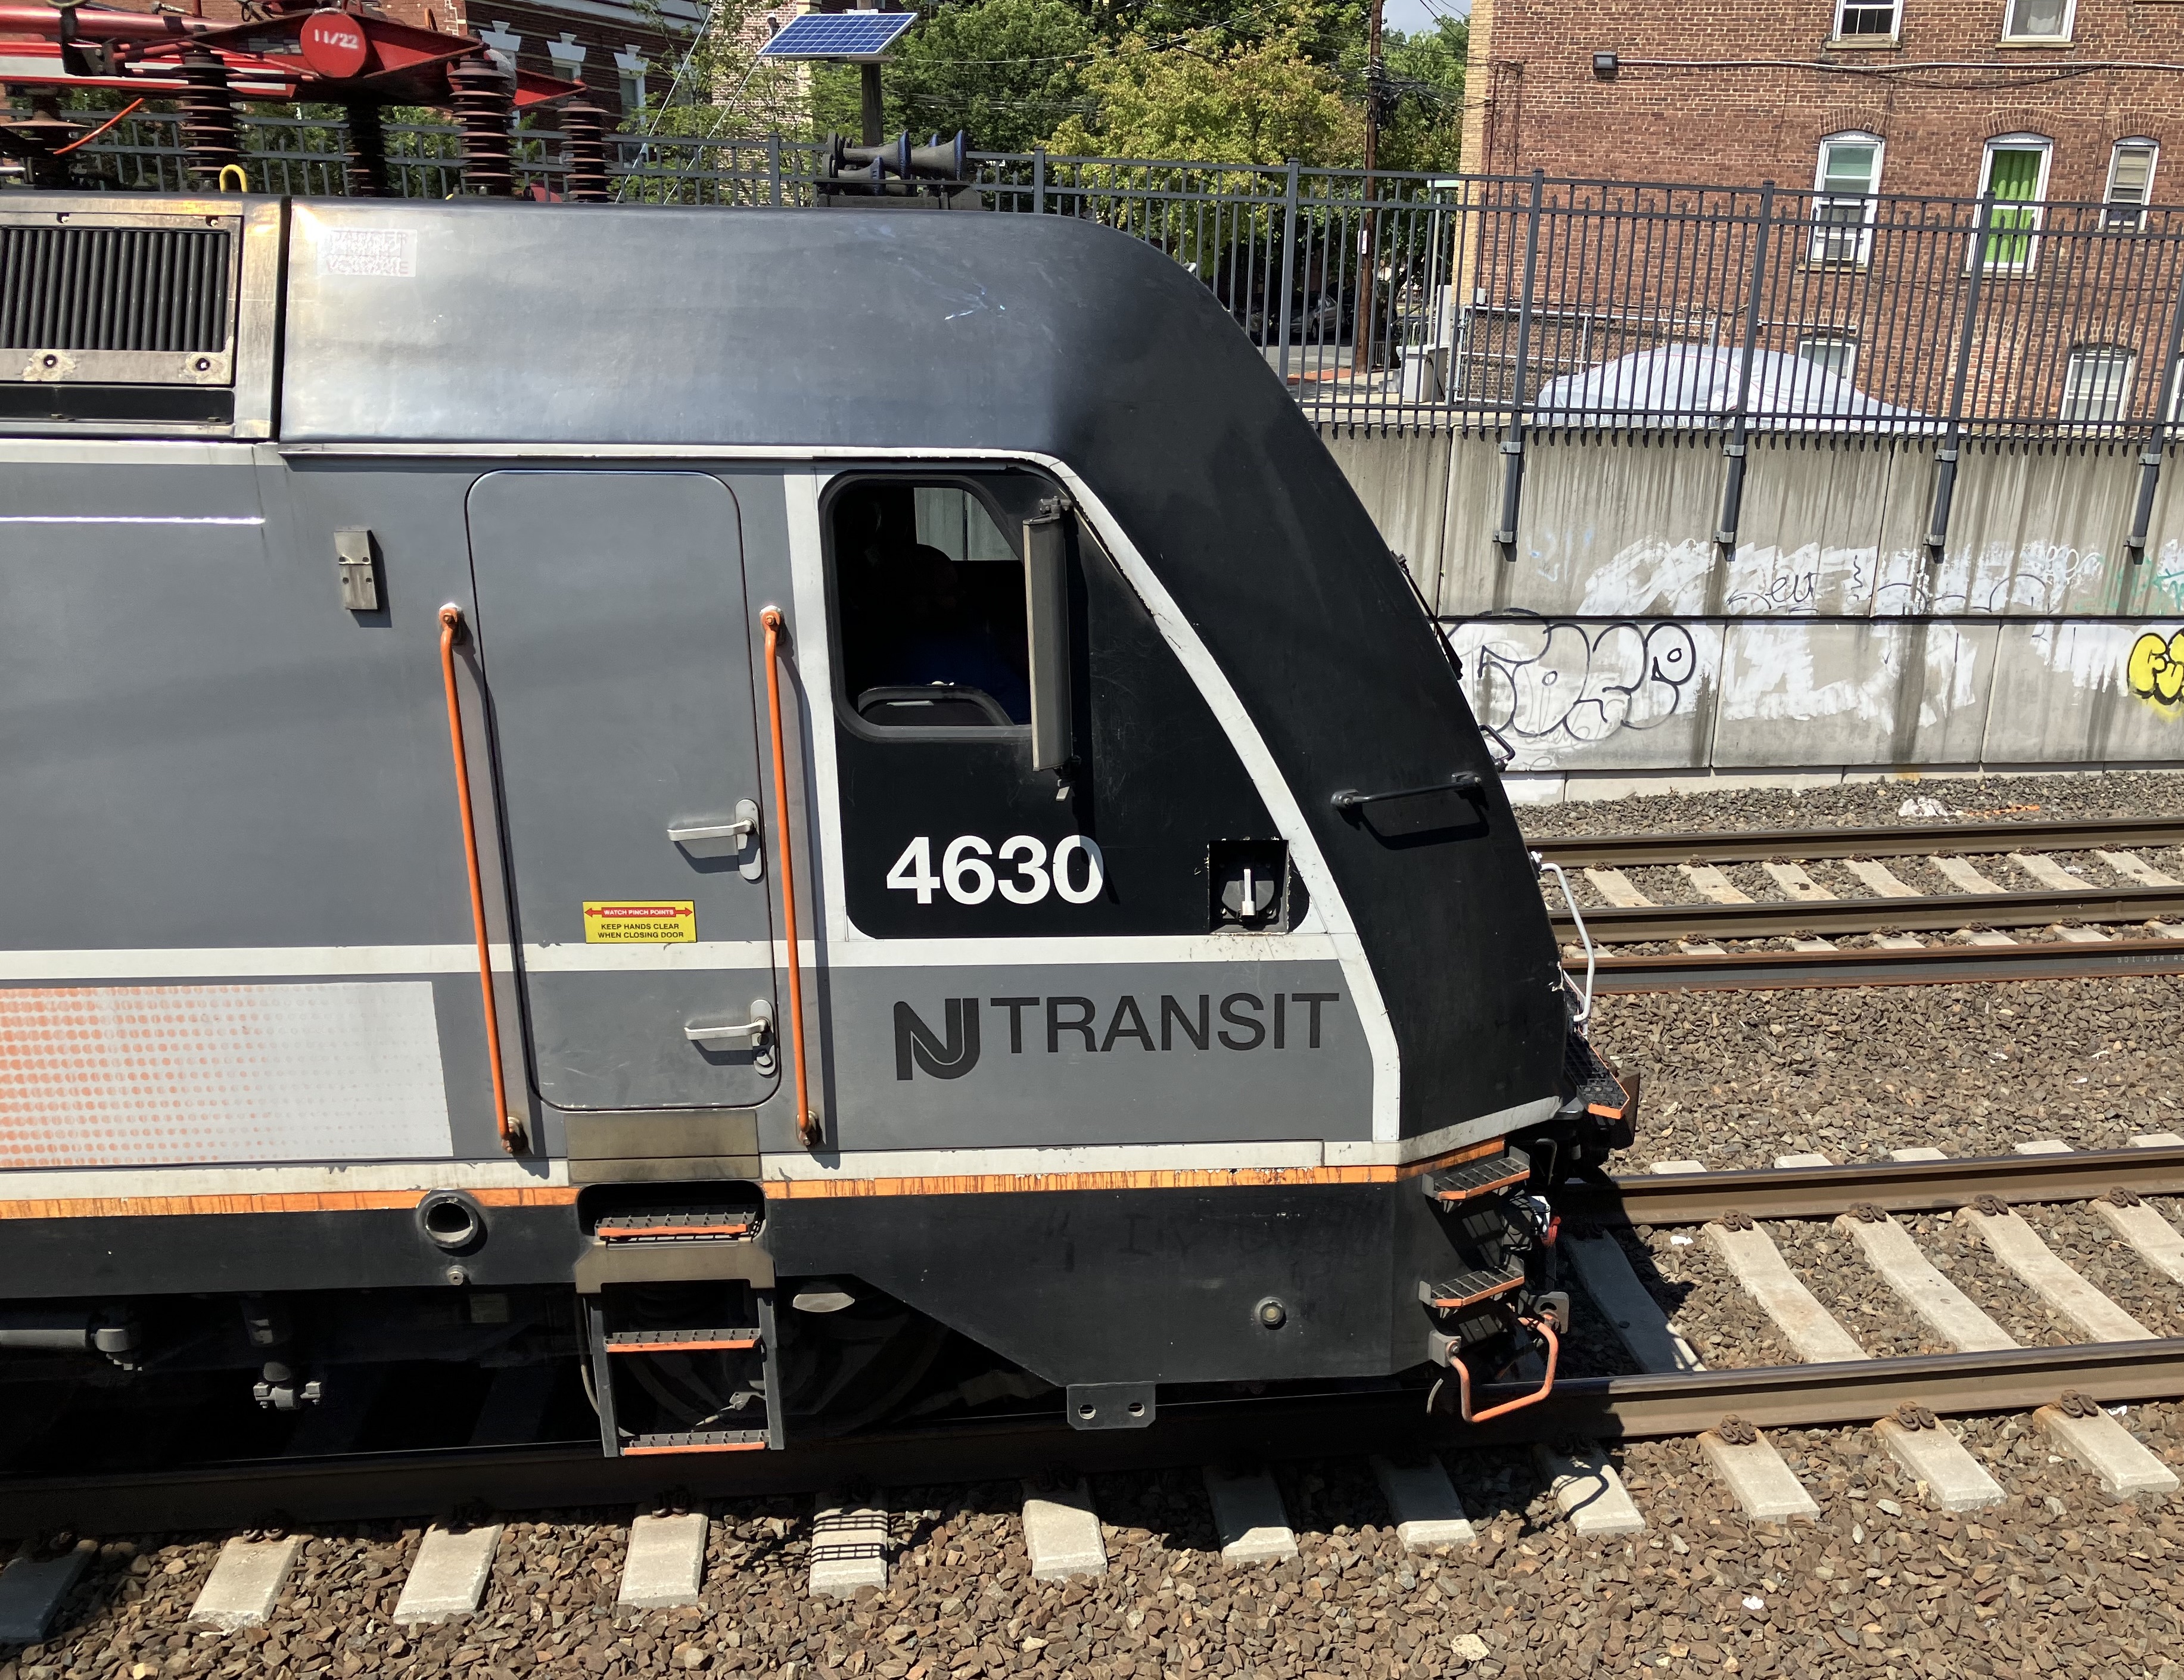 NJ TRANSIT LONG BRANCH TRAIN STATION - 13 Photos & 11 Reviews